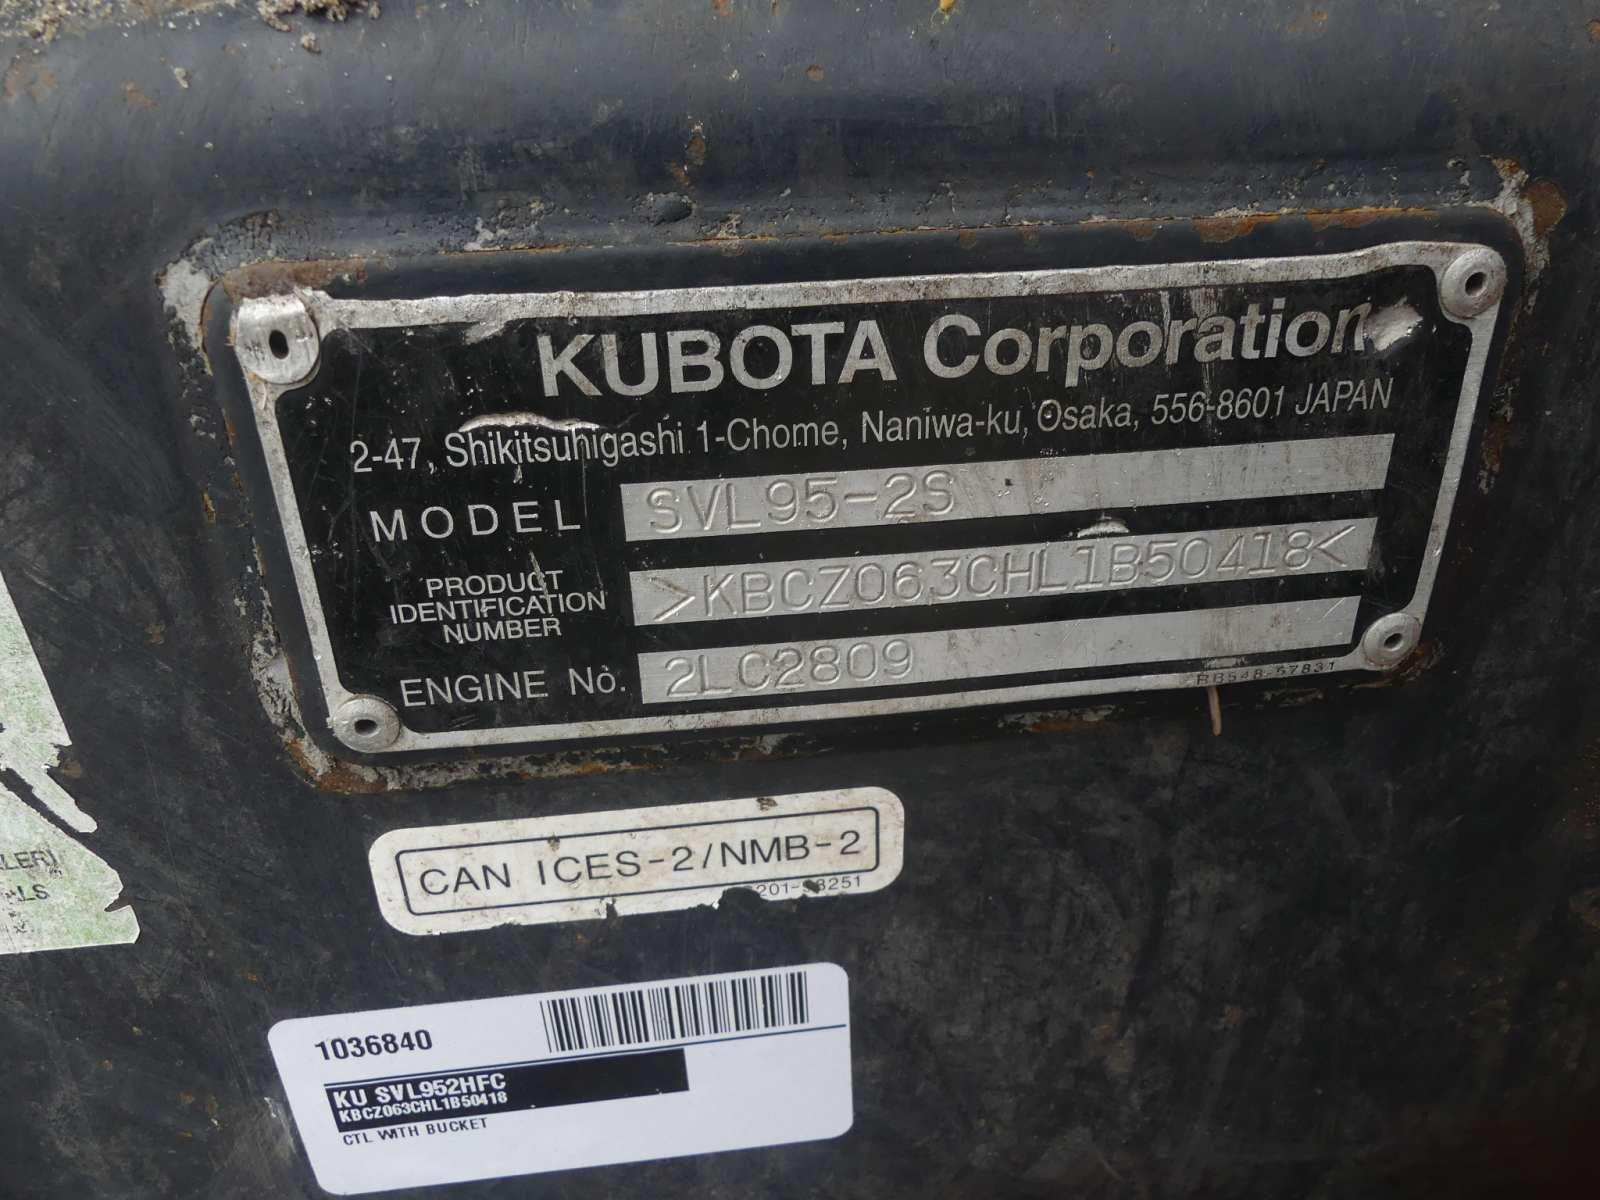 2020 Kubota SVL95-2S Skid Steer, s/n KBCZ063CHL1B50418: Encl. Cab, Hyd. QC